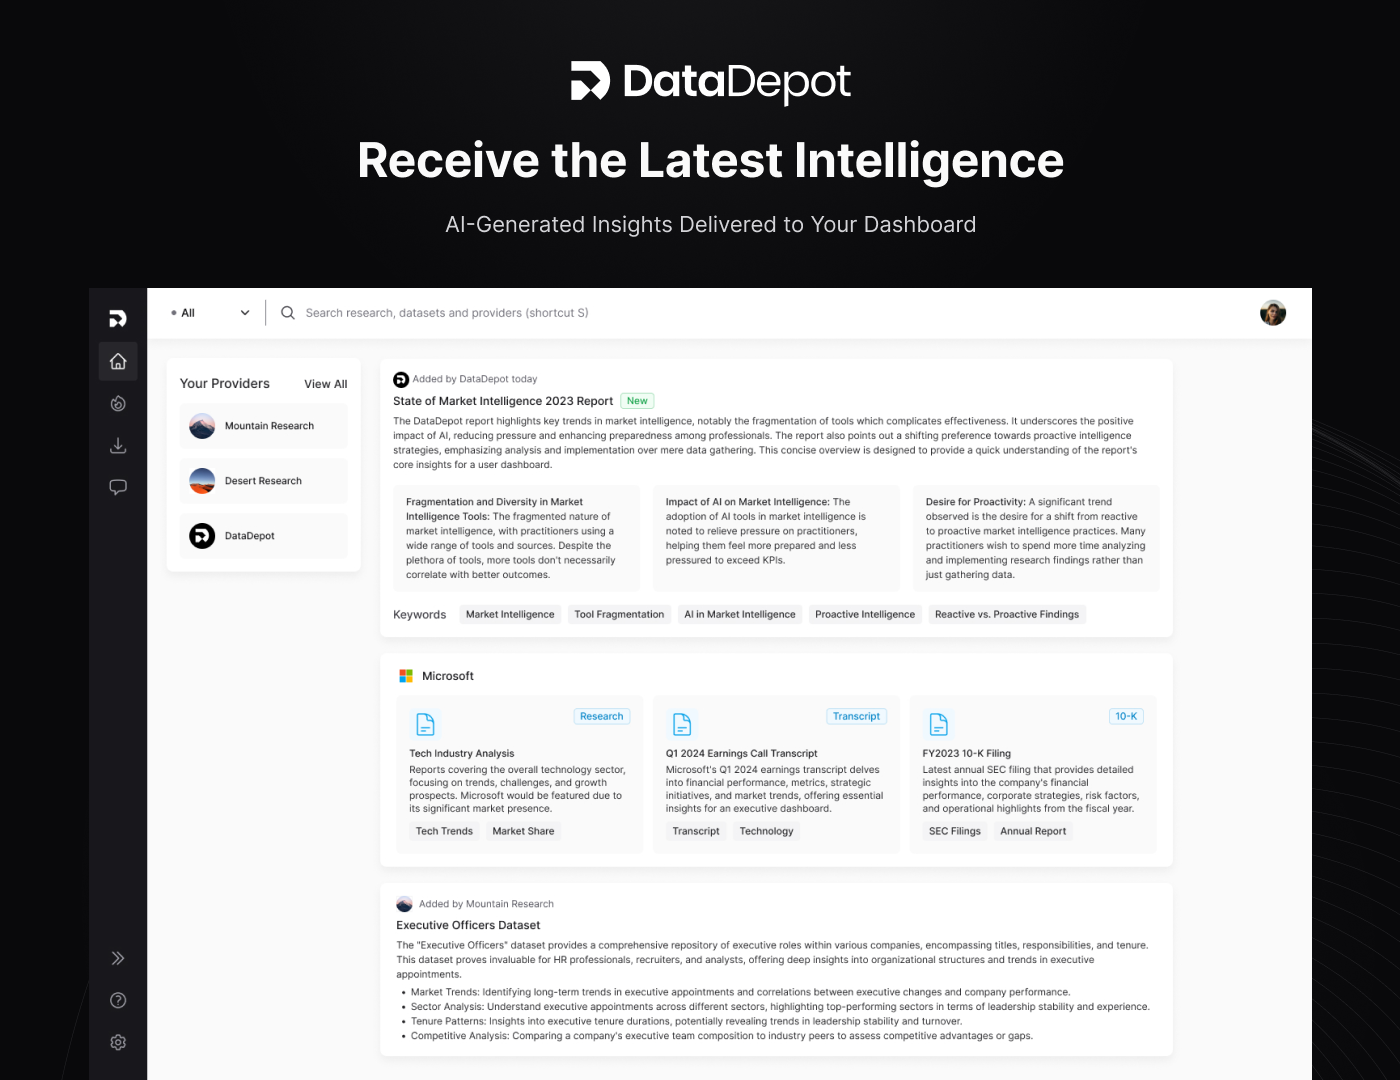 datadepot - AI-Powered Research Terminal